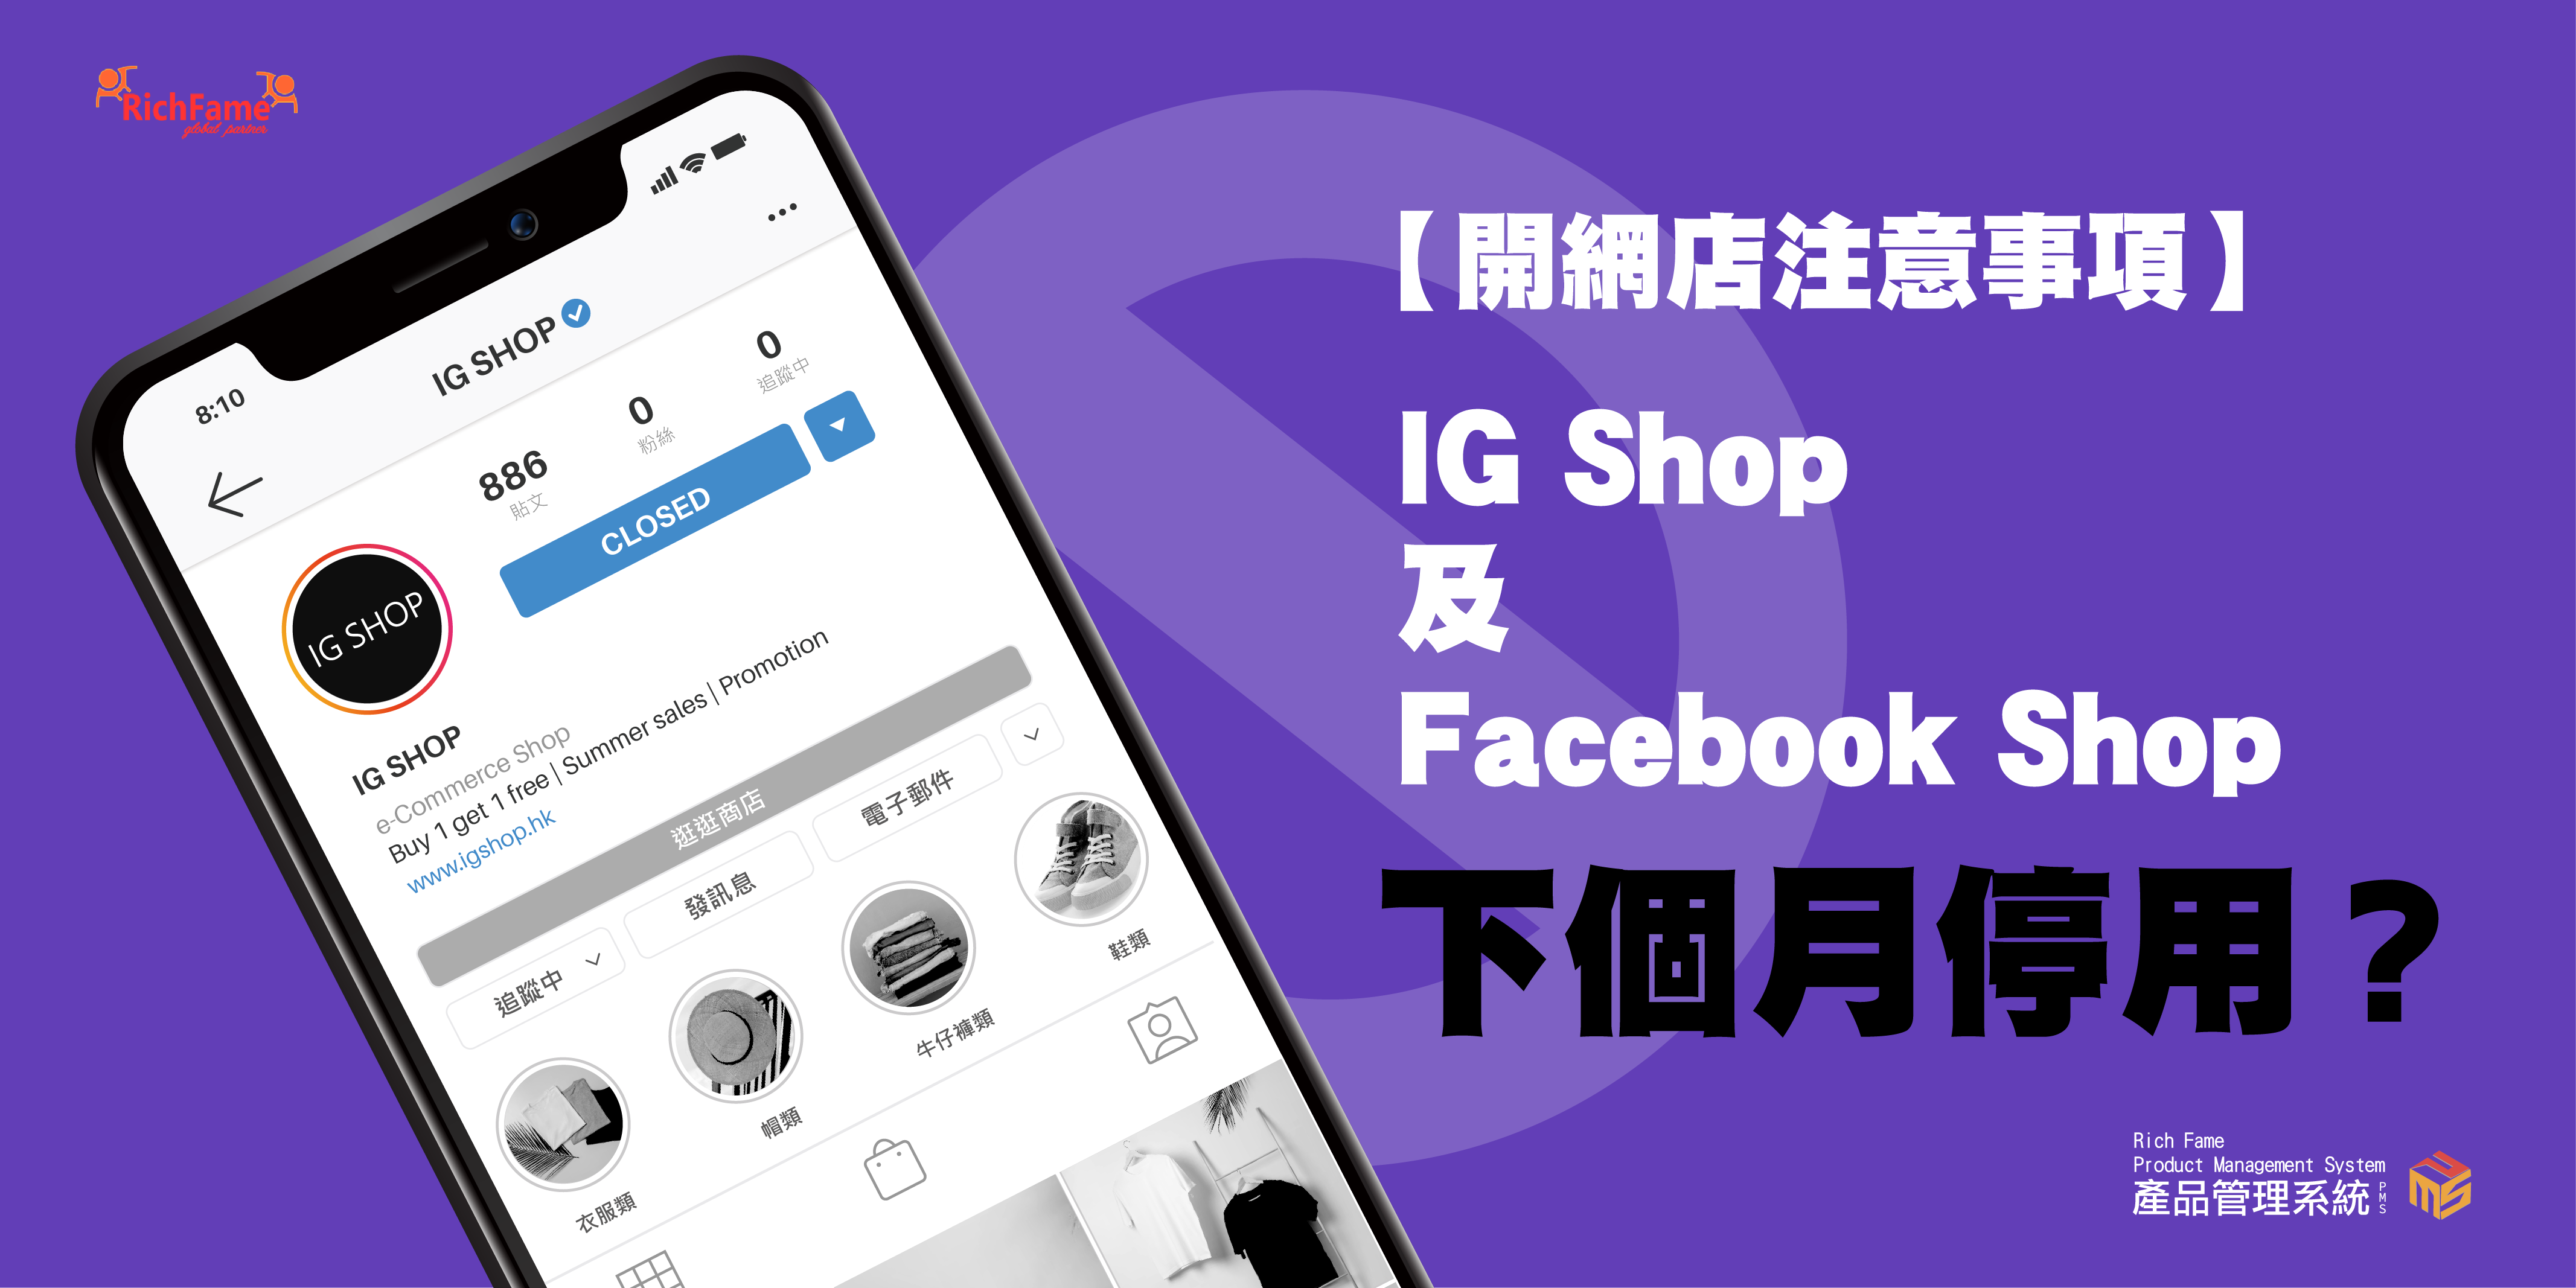 【開網店注意事項】IG Shop 及 Facebook Shop 下個月停用？